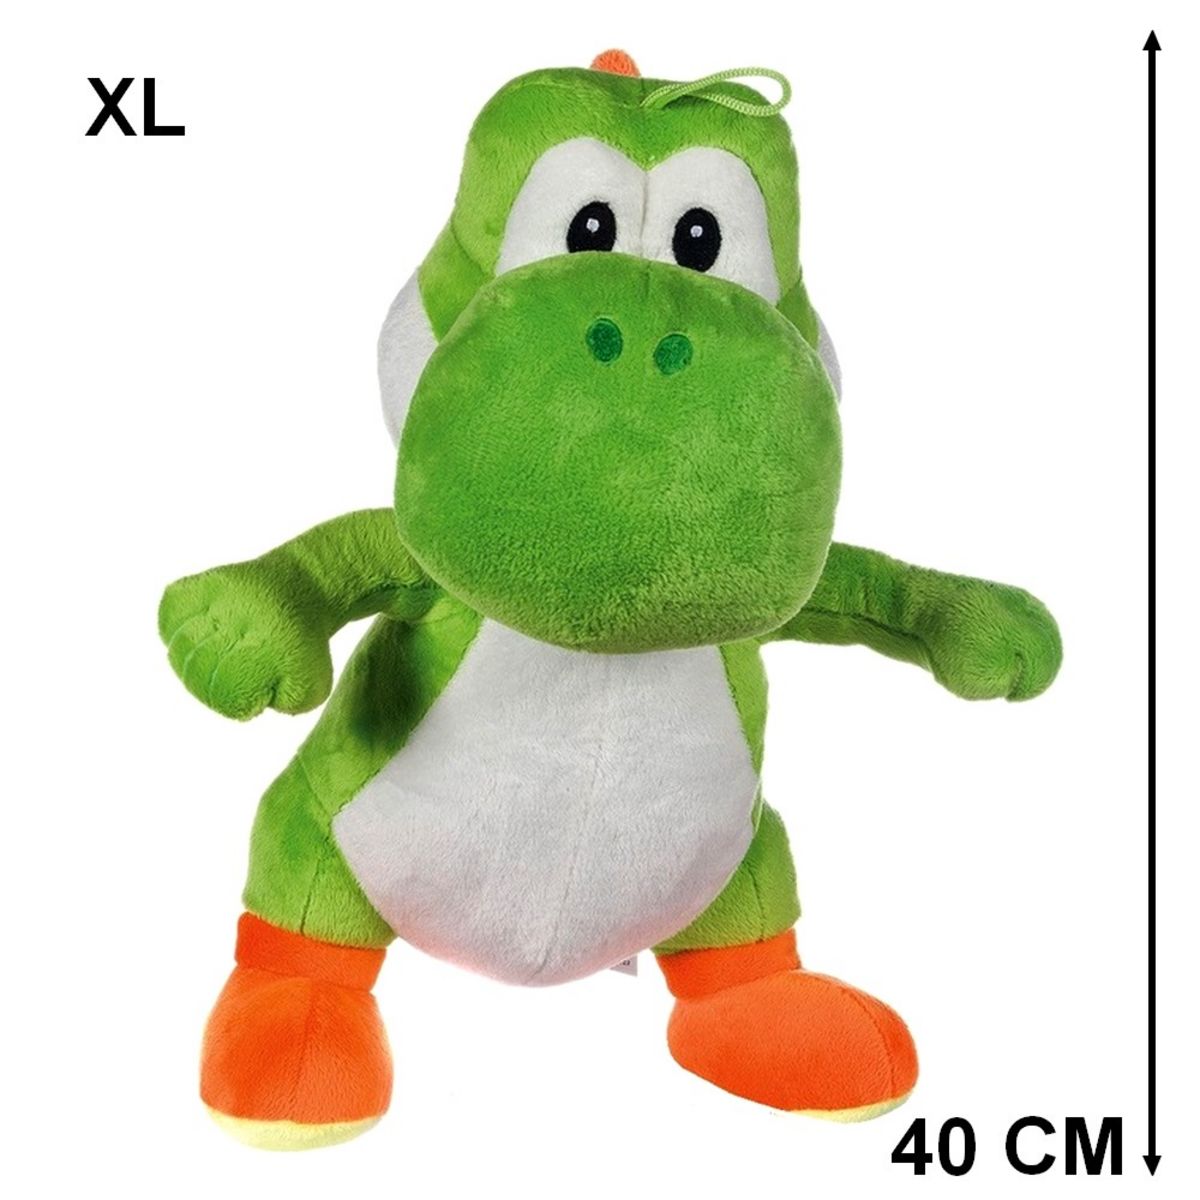 XL Grande Peluche Yoshi vert 40 cm Nintendo pas cher 